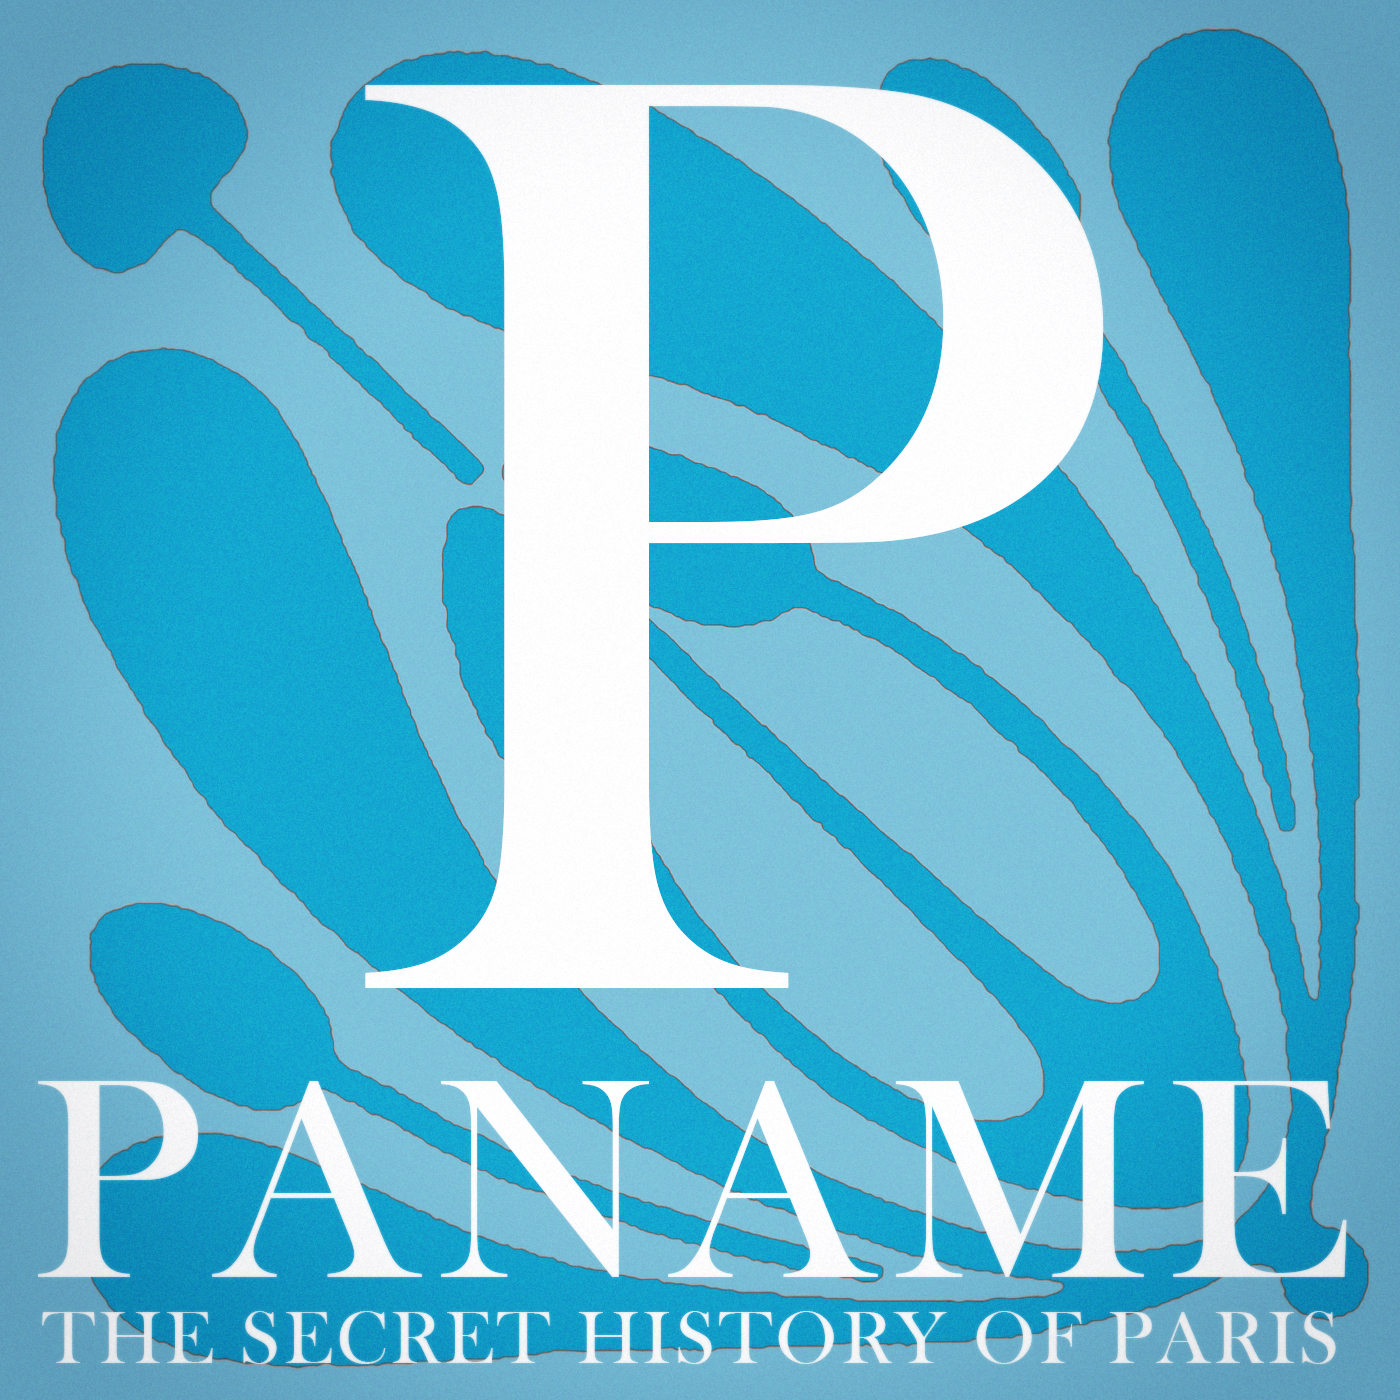 Paname: The Secret History of Paris podcast show image